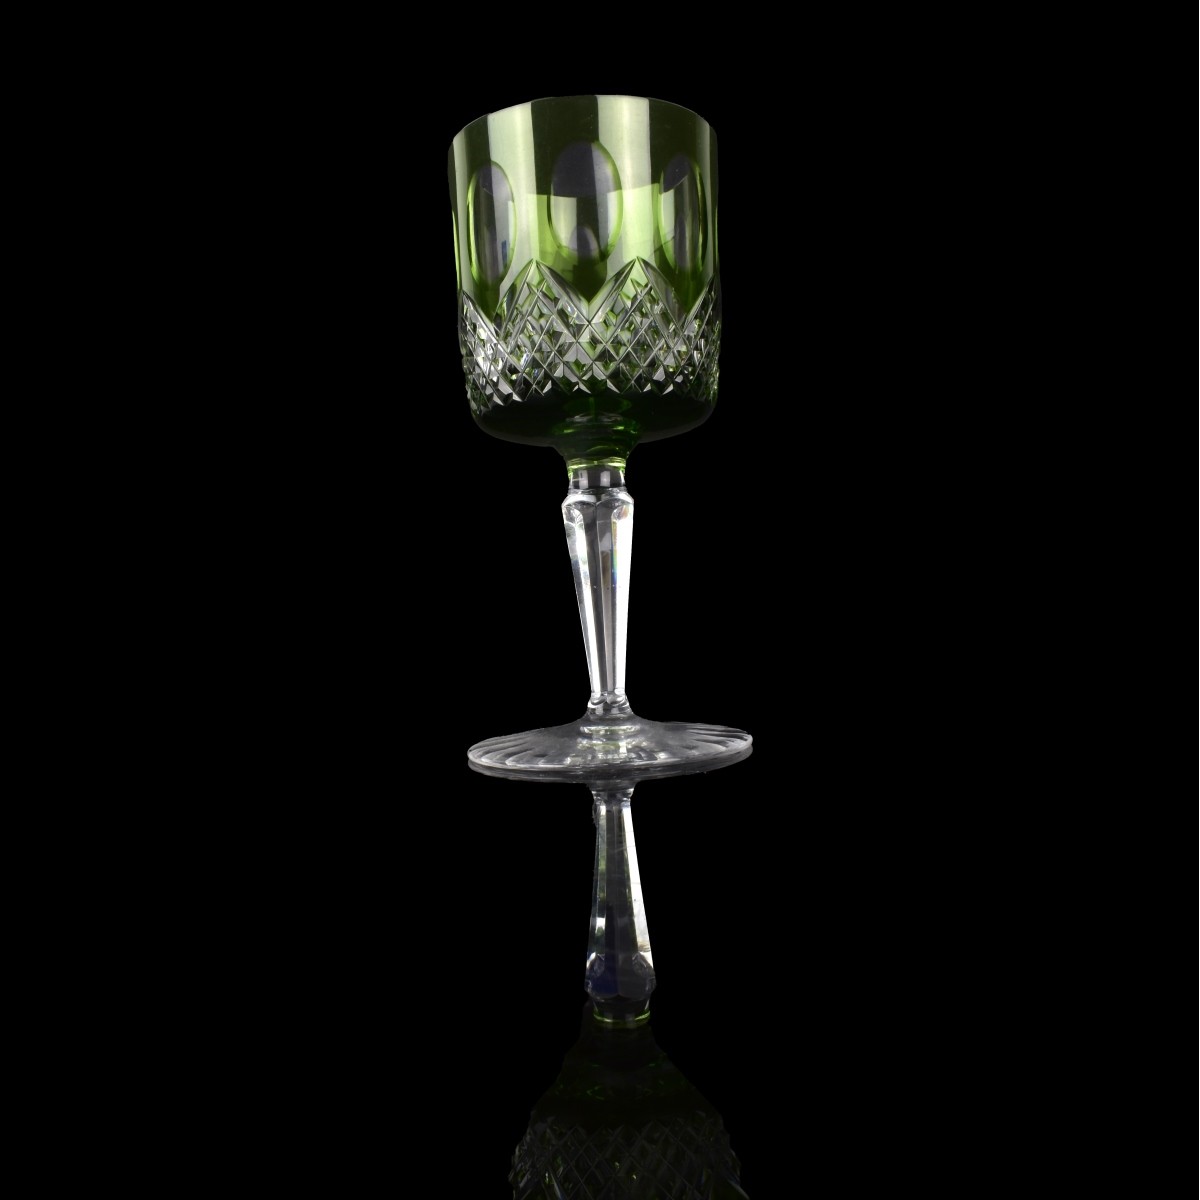 Six Vintage Ajka Glass Stemware